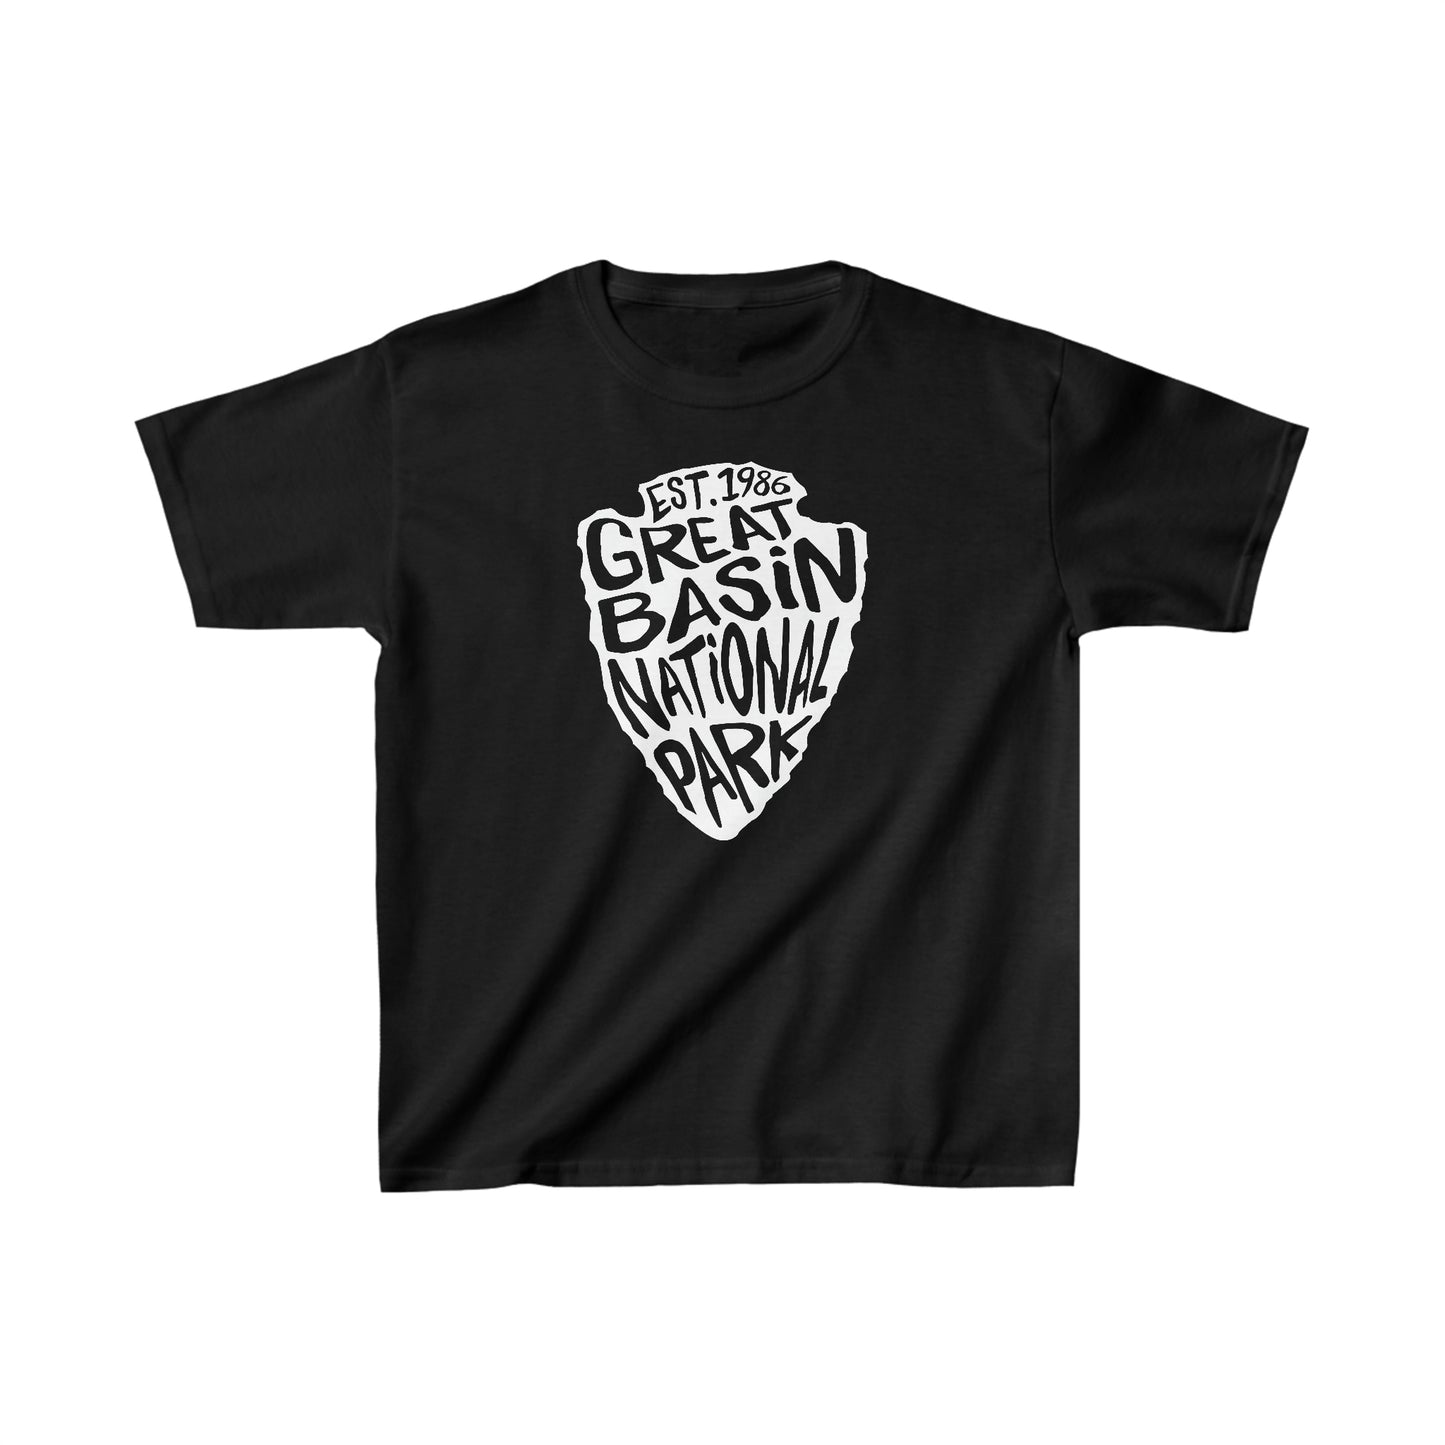 Great Basin National Park Child T-Shirt - Arrowhead Design